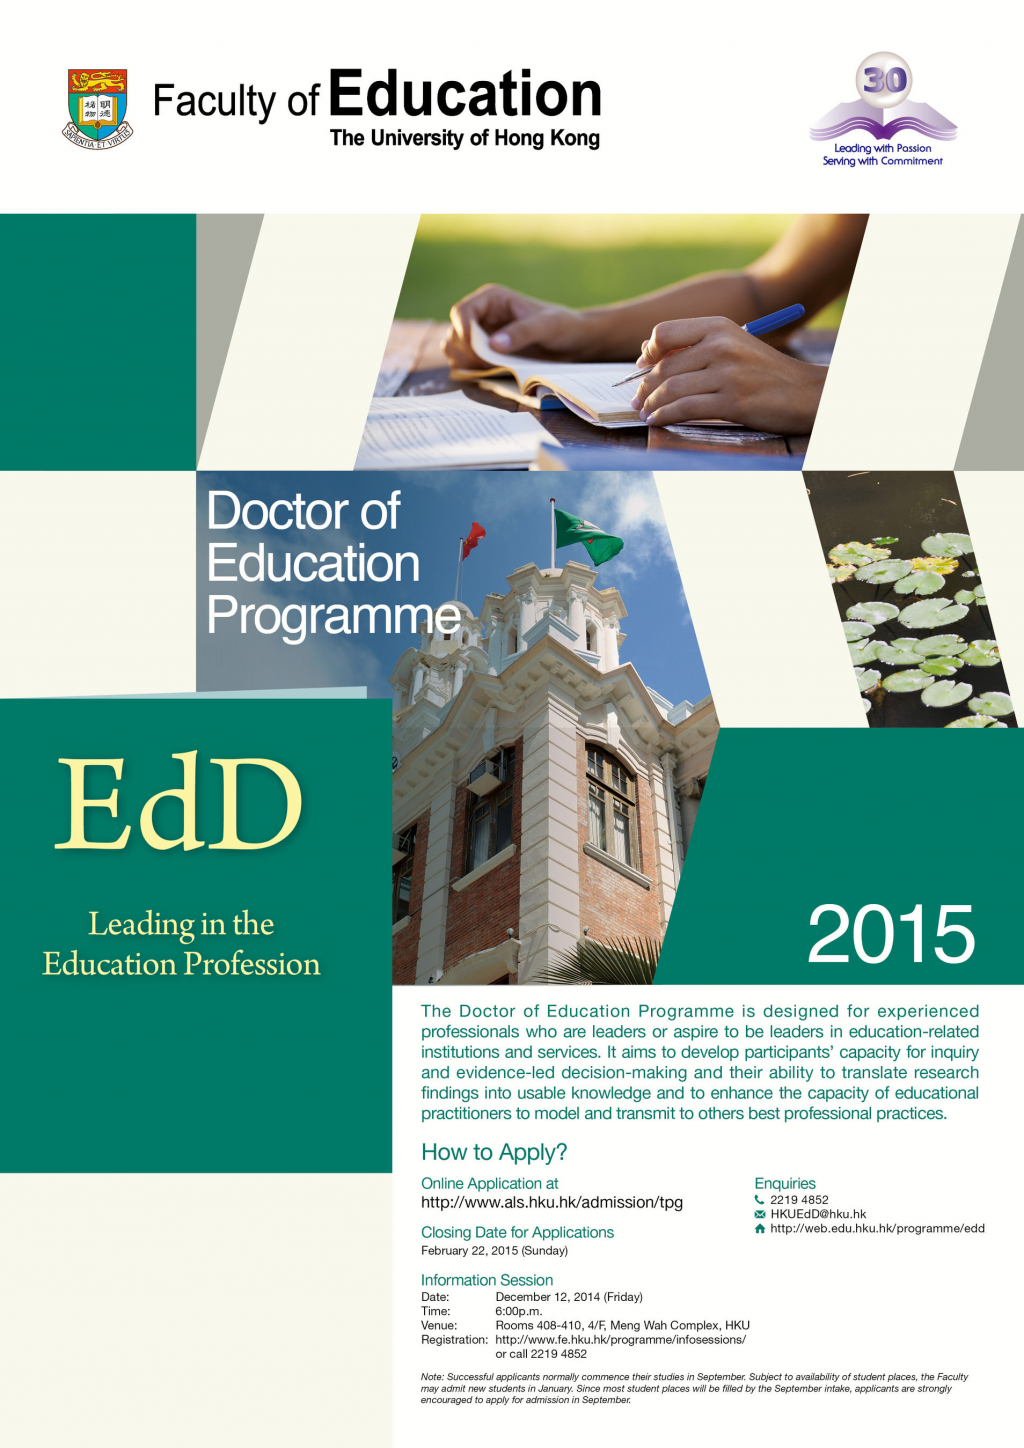 Information Session of EdD